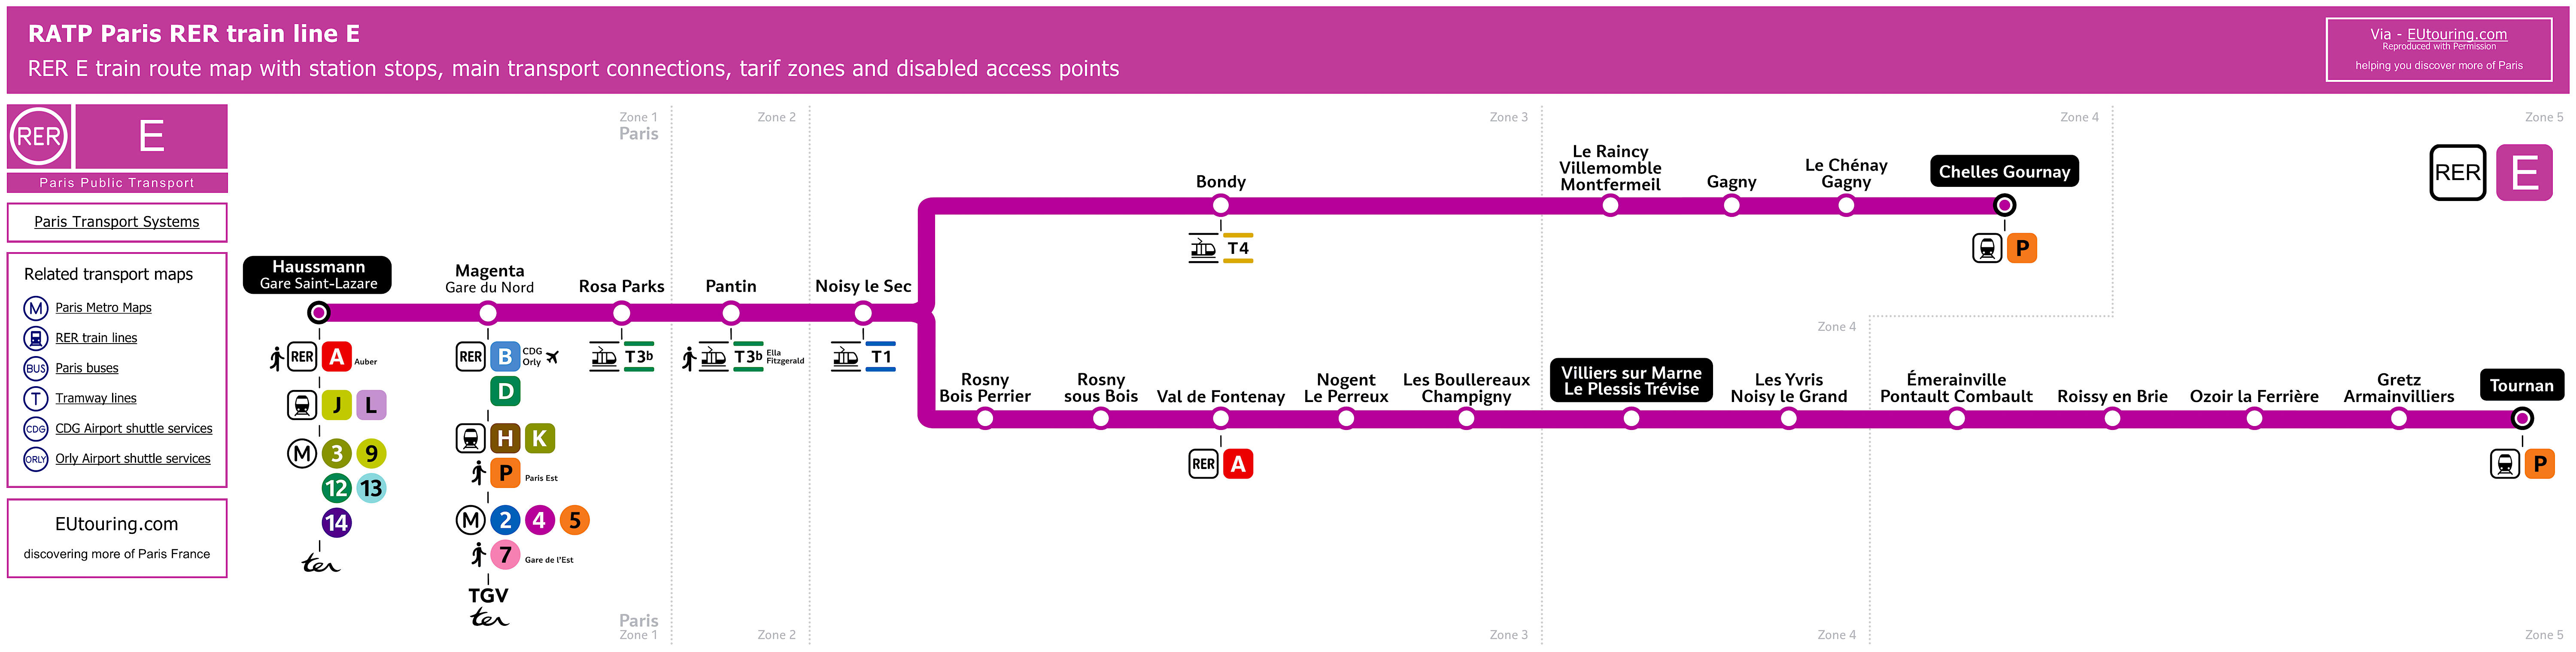 Sncf And Ratp Rer Train Maps For Paris And Ile De France - Bank2home.com